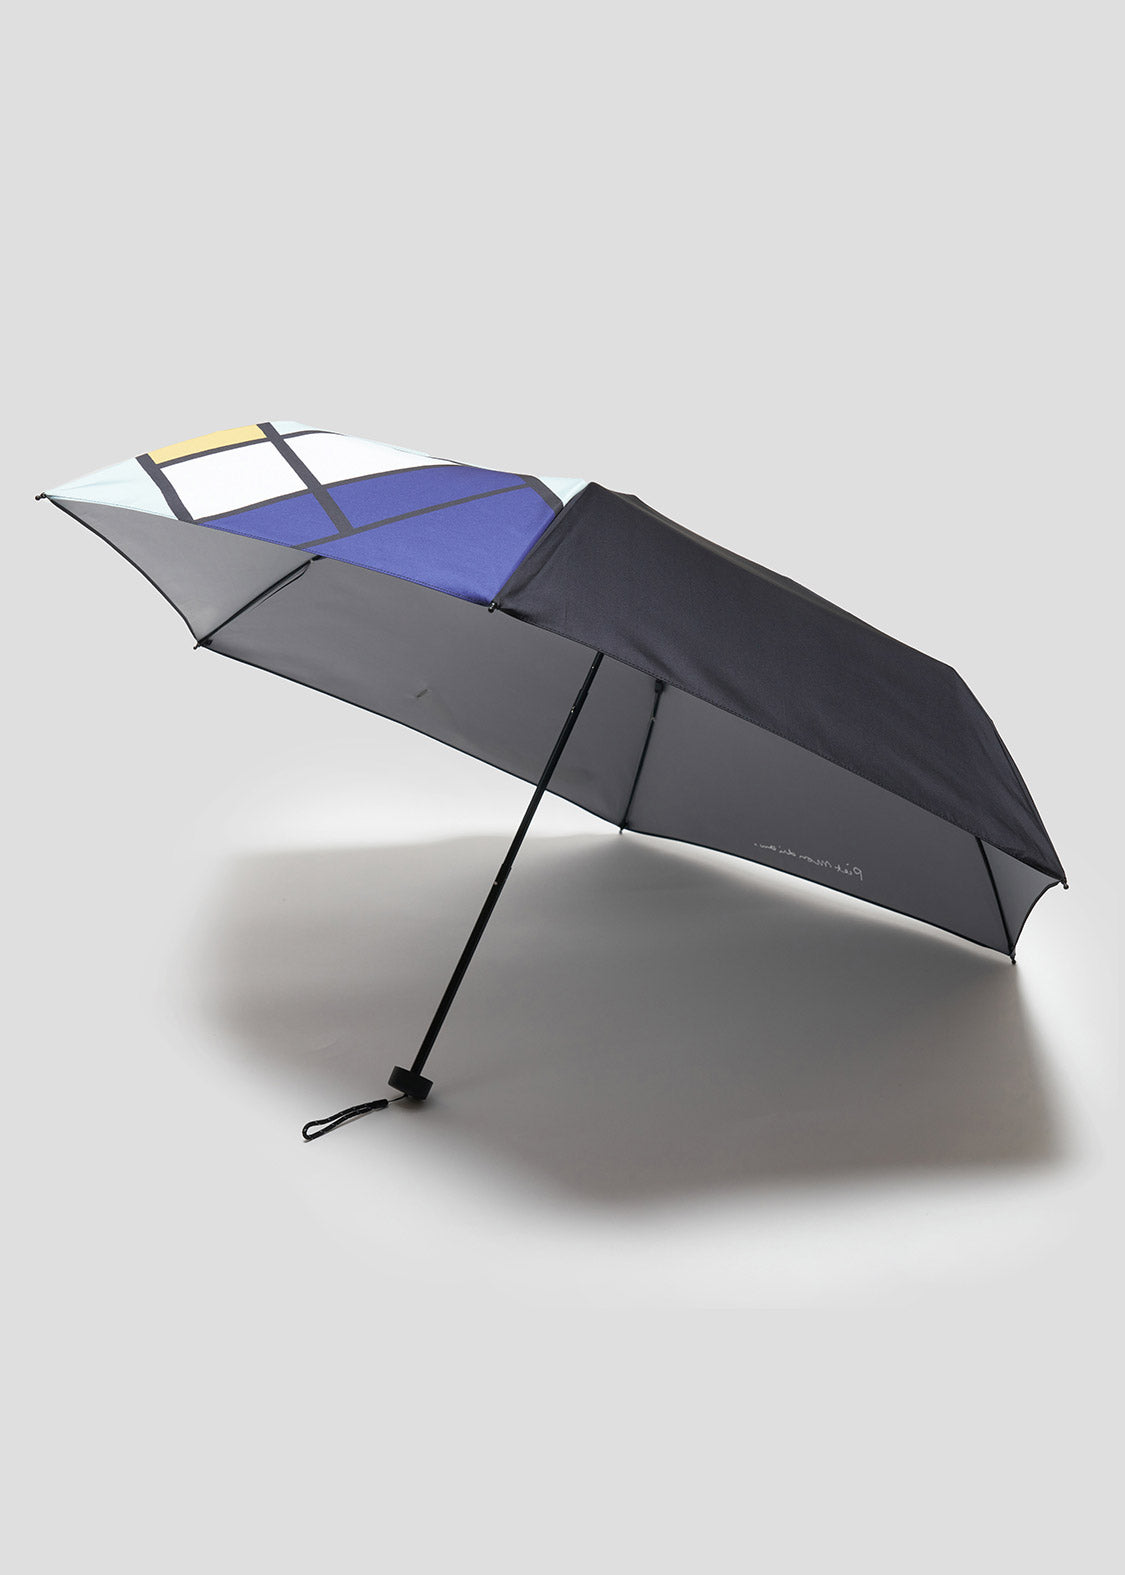 Piet Mondrian Umbrella (Piet Mondrian_Composition 1921 B)